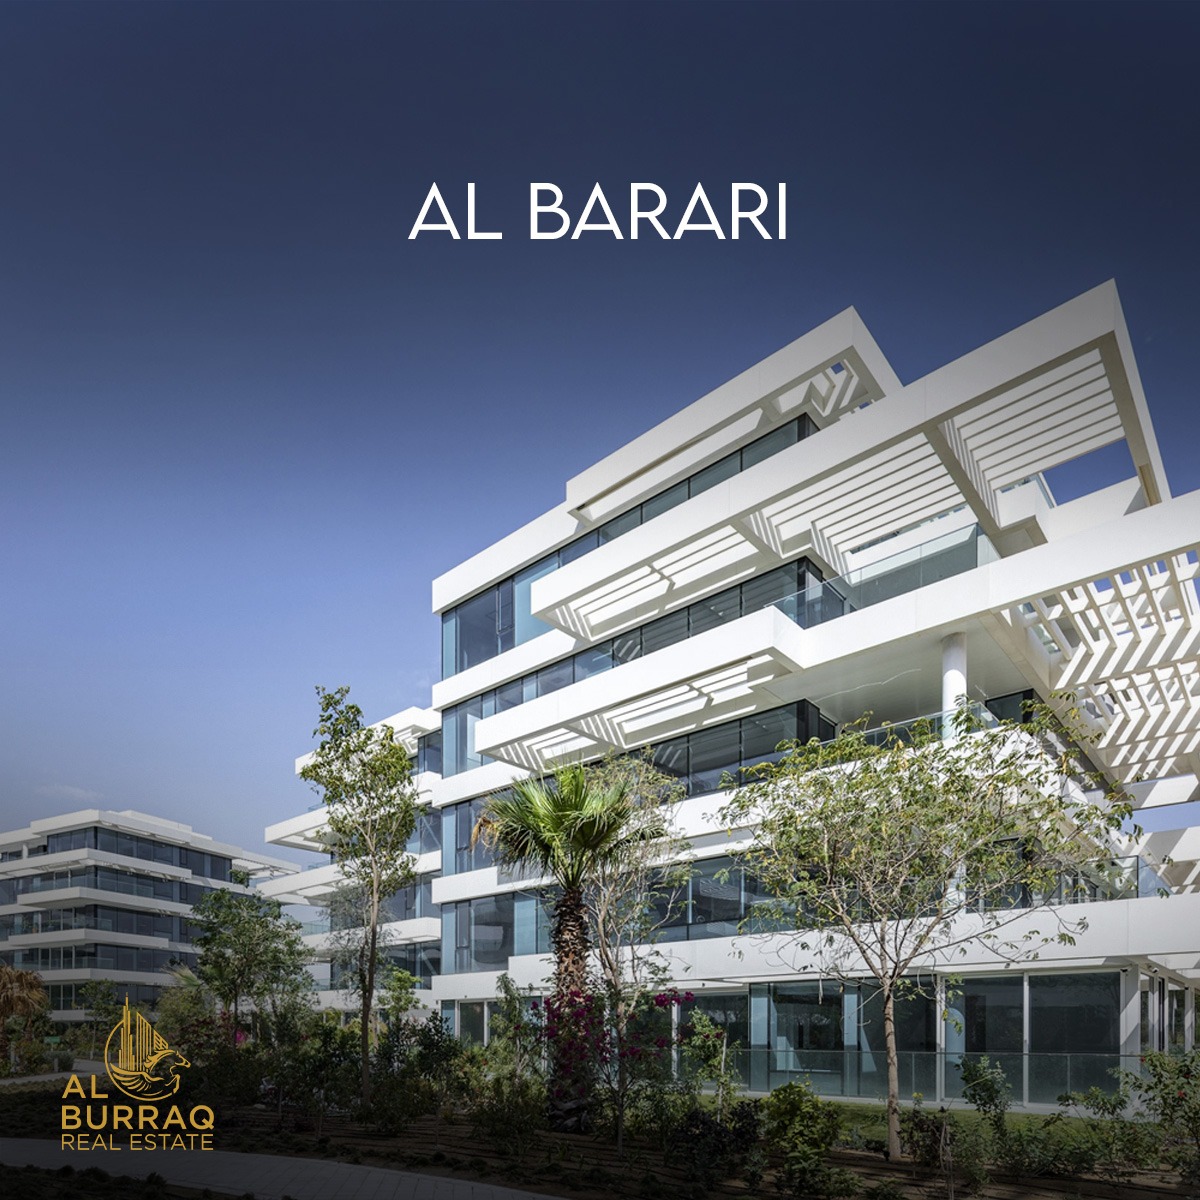 Al Barari: Luxury Real Estate’s 400% Surge in Deals